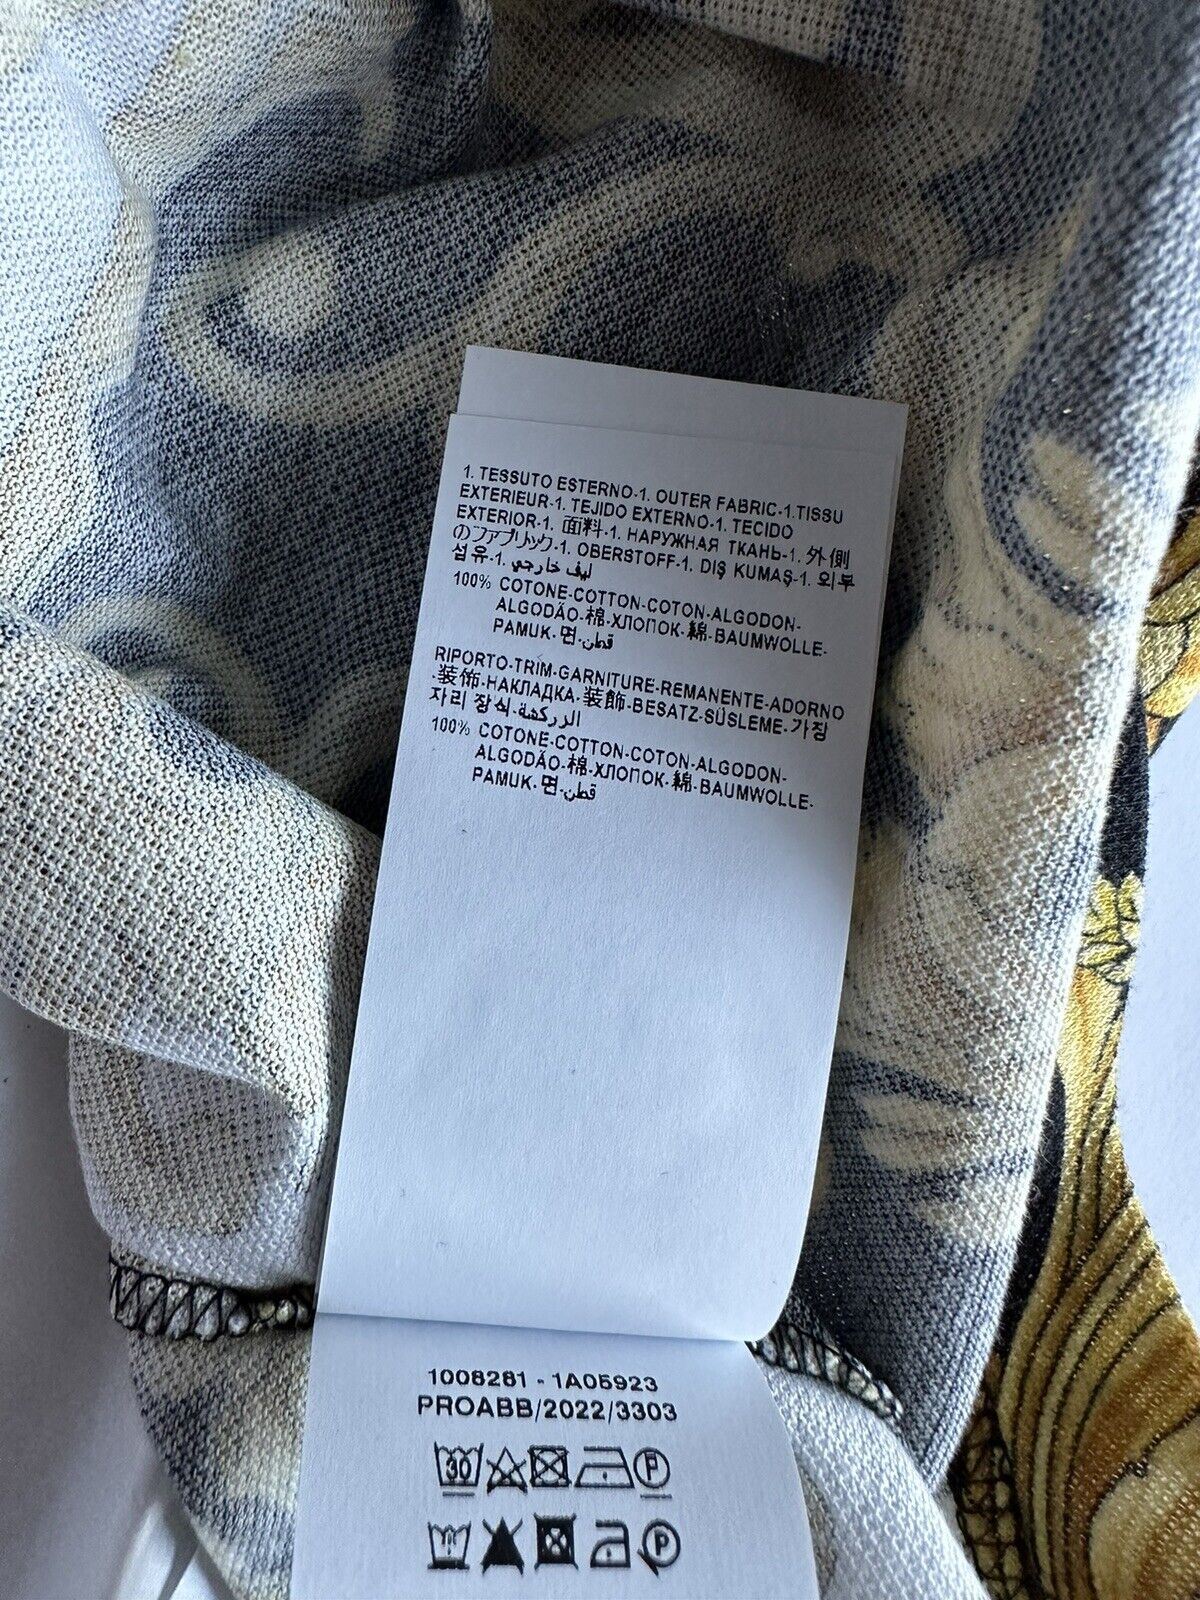 NWT $600 Versace Piquet Fabric Medusa Renaissance Polo Shirt Medium 1008281